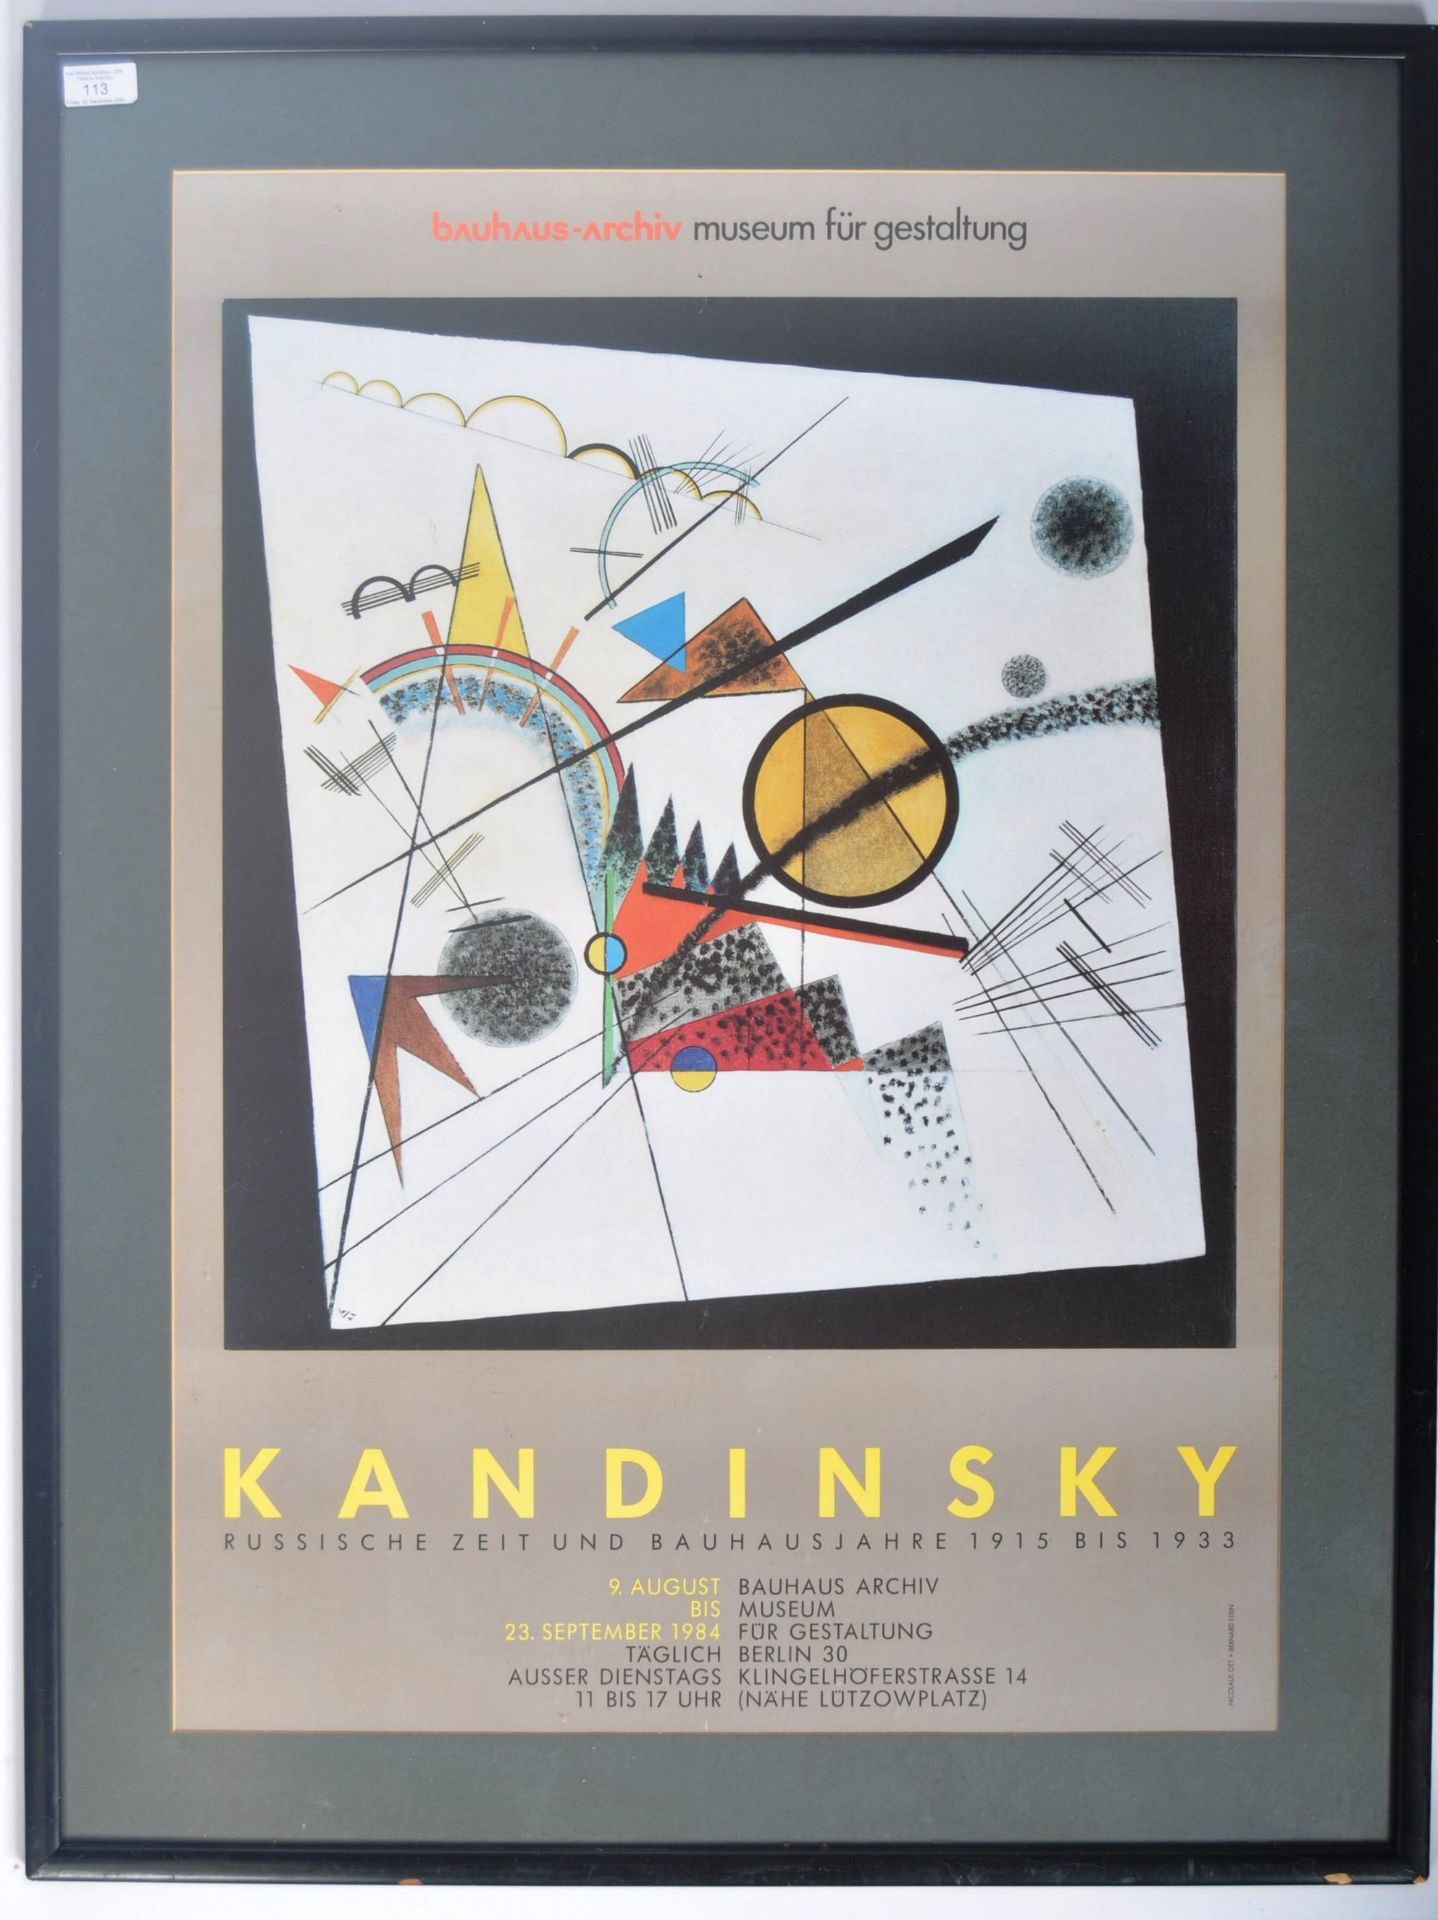 KANDINSKY 1980'S MUSEUM EXHIBITION POSTER FOR BAUHAUS ARCHIV MUSEUM